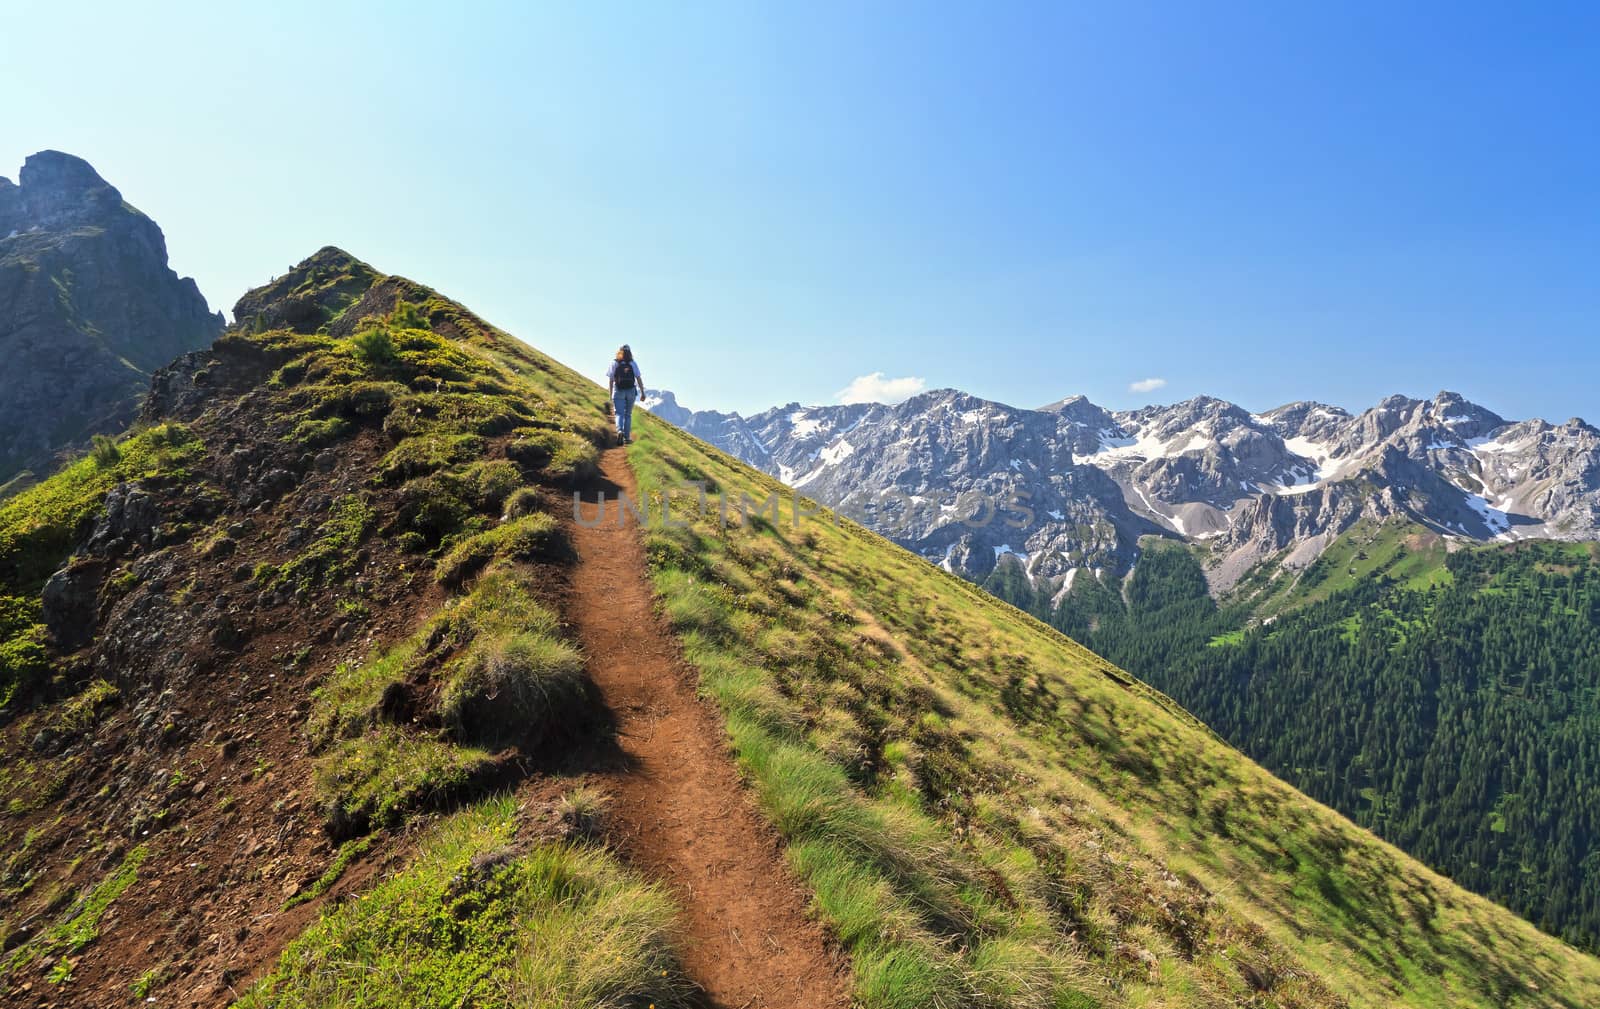 hiker in action on alpine ridge, on background San Nicolo' valley, Trentino, Italy